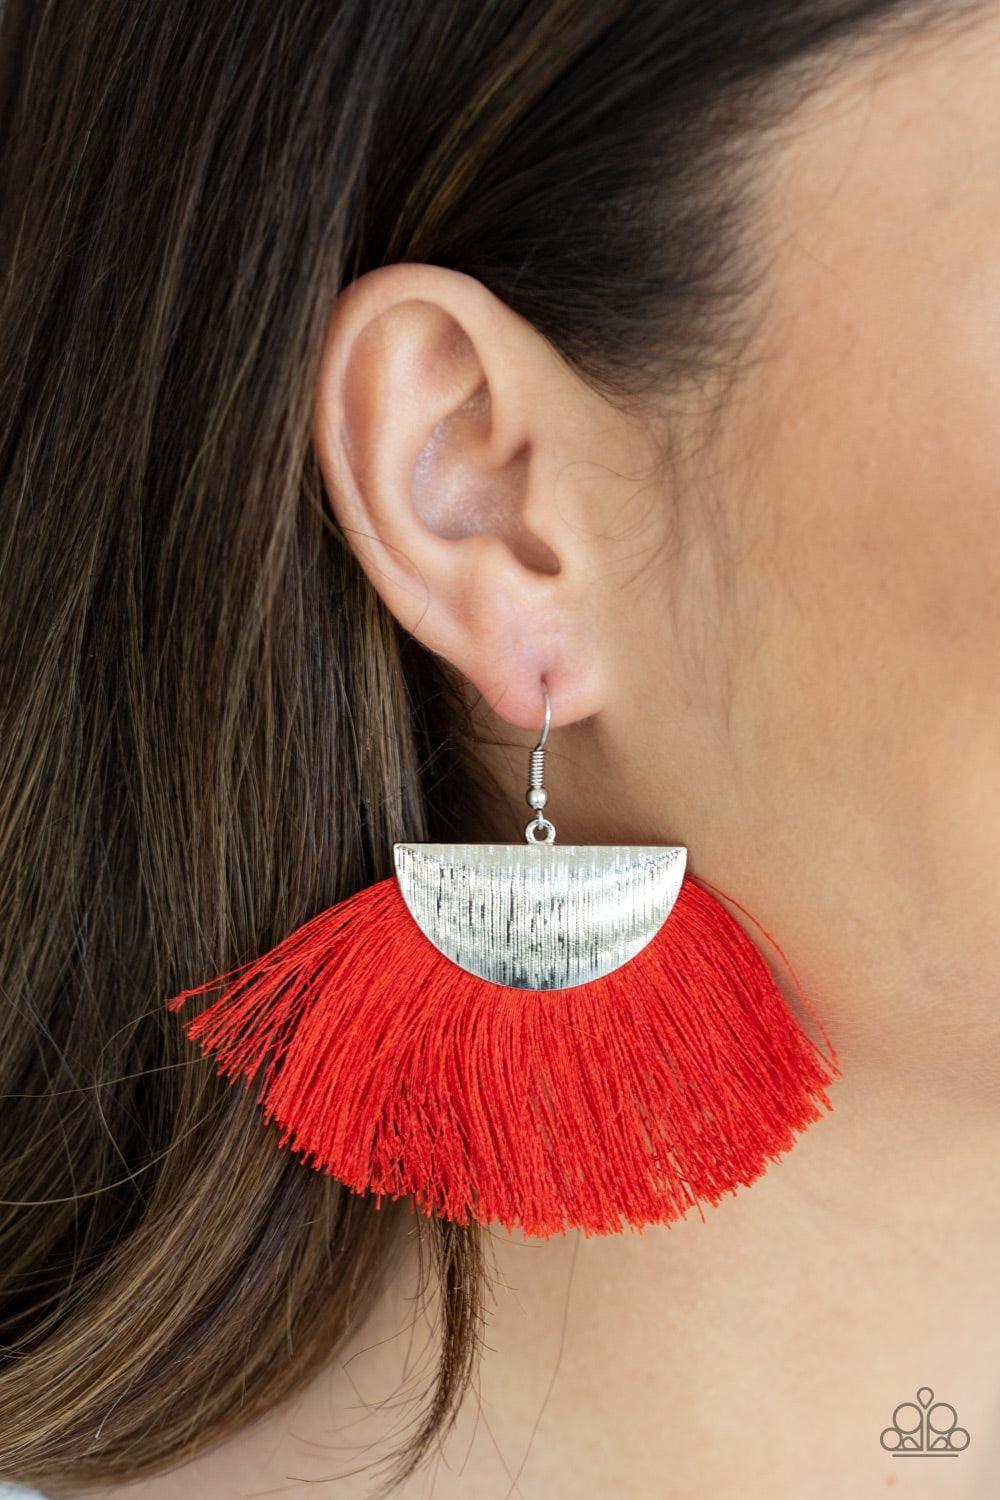 Paparazzi Accessories - Fox Trap - Red Fringe Earrings - Bling by JessieK